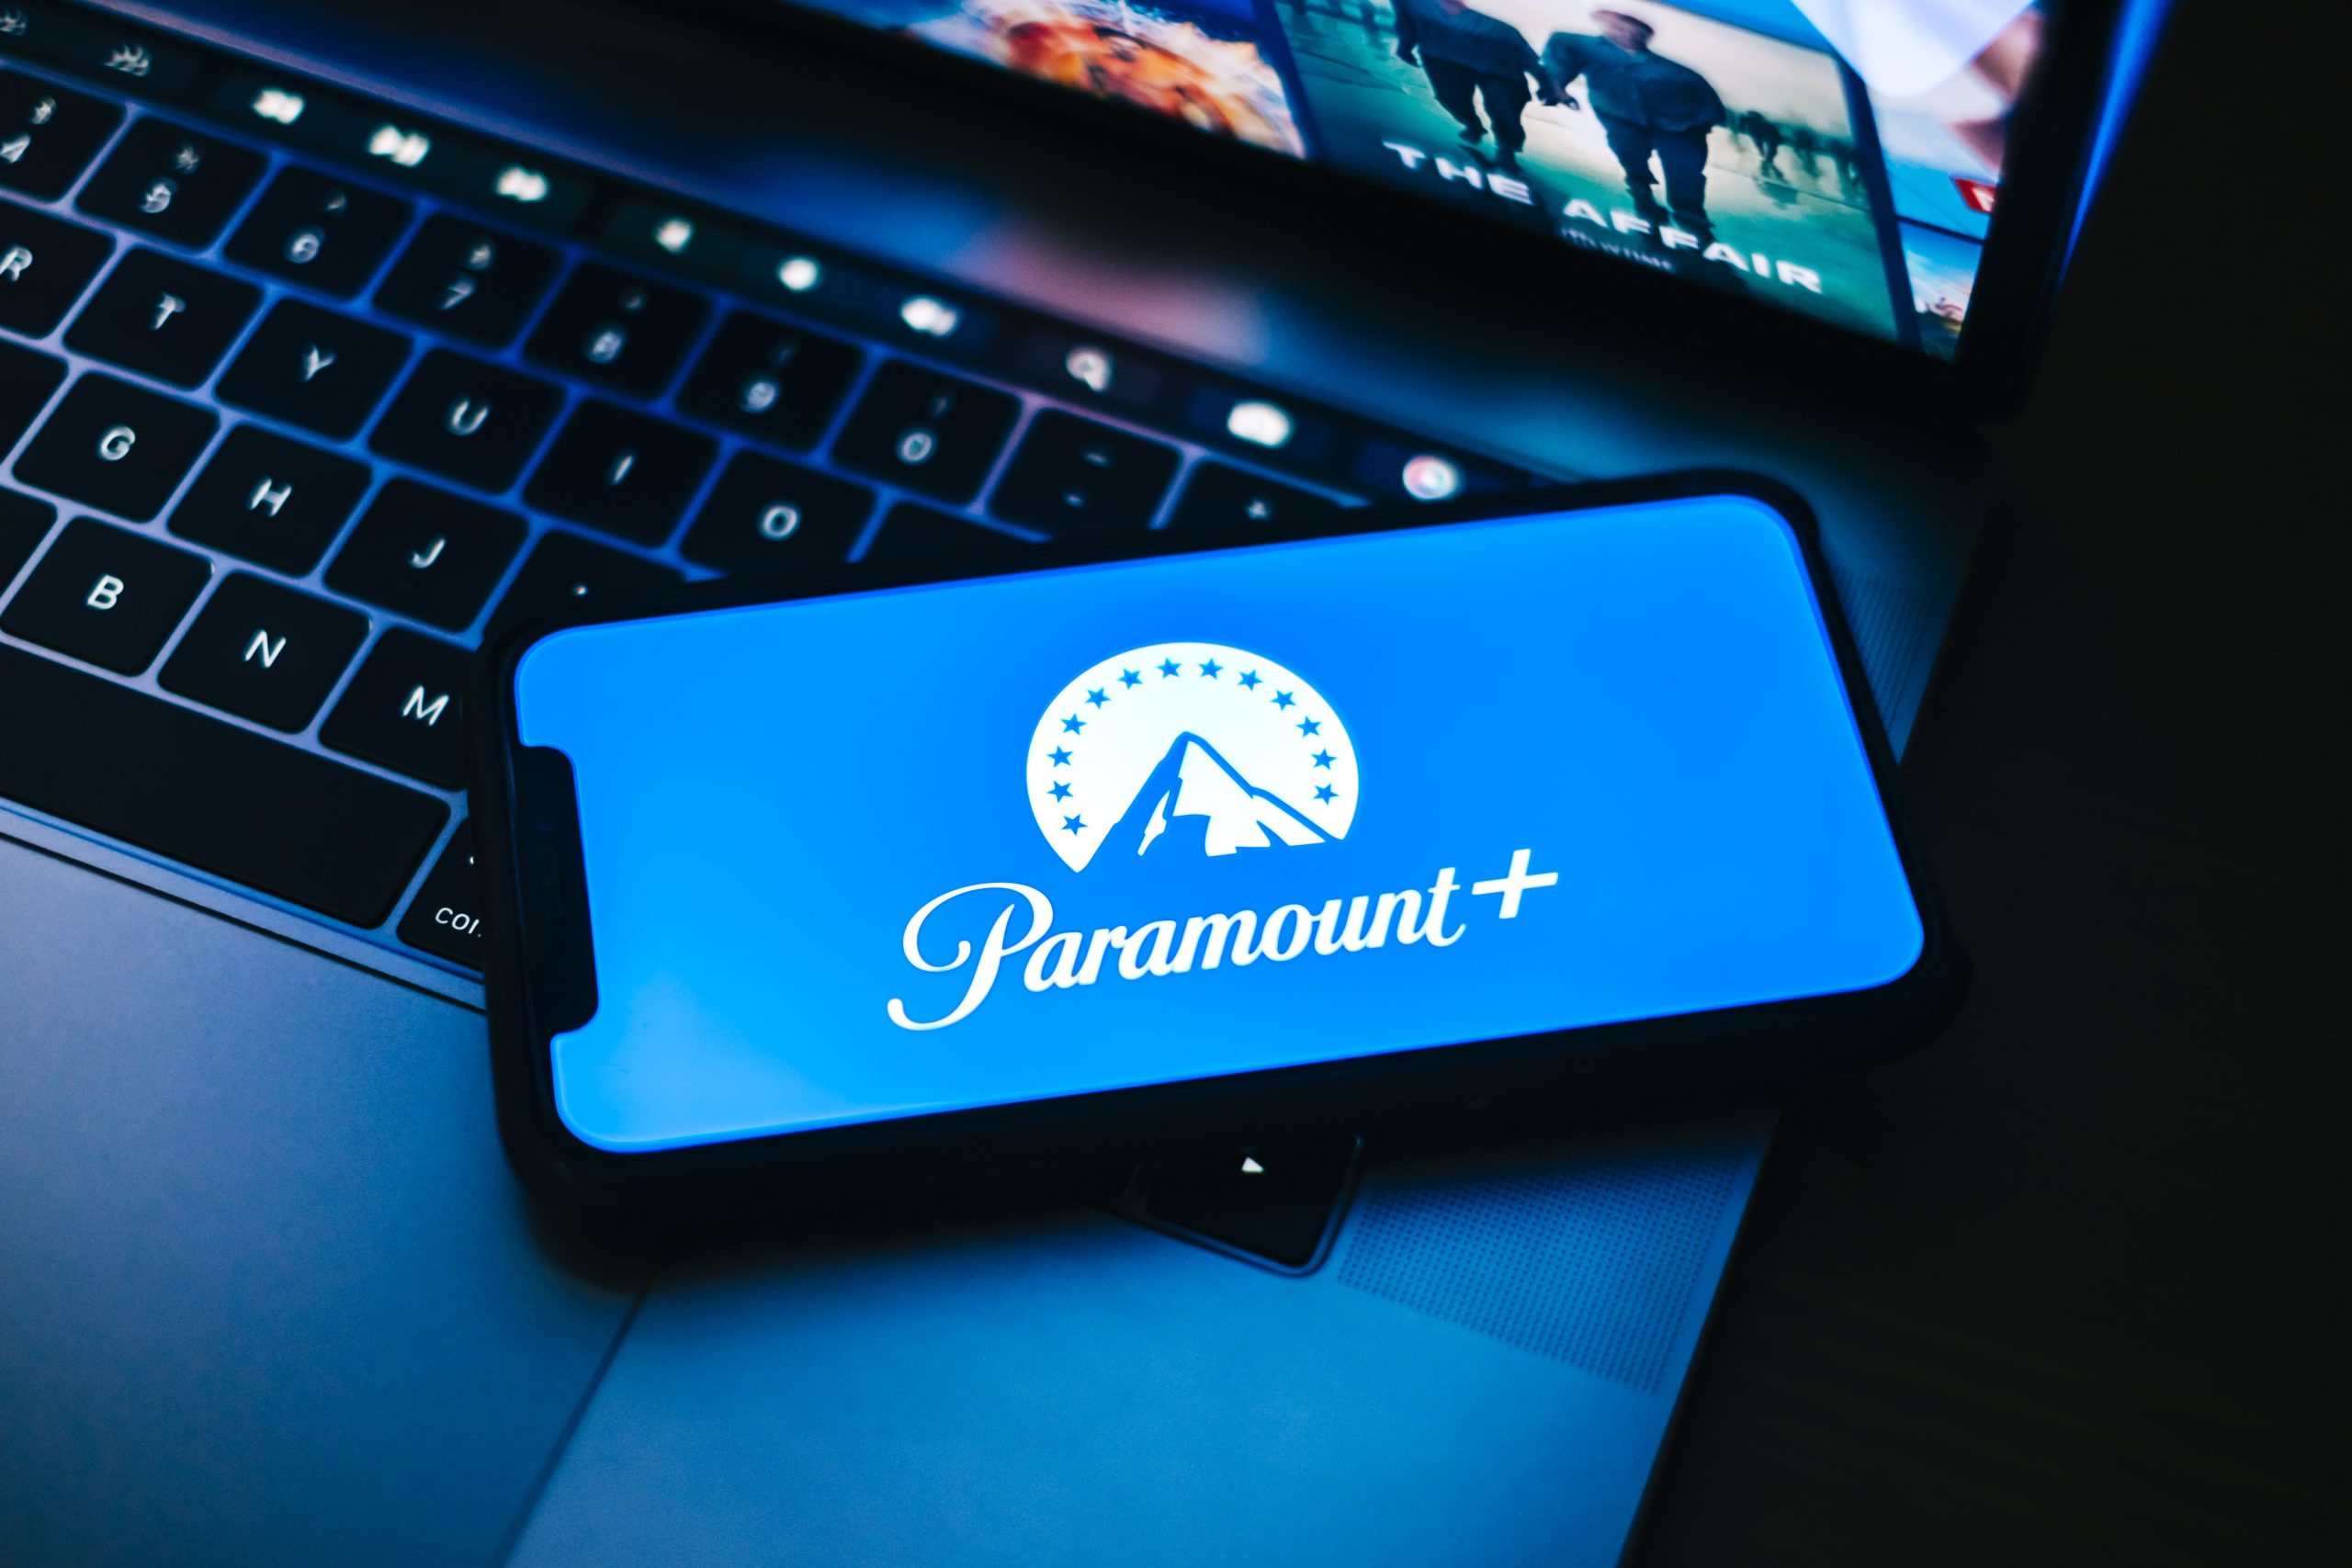 Paramount Plus logo on phone and laptop